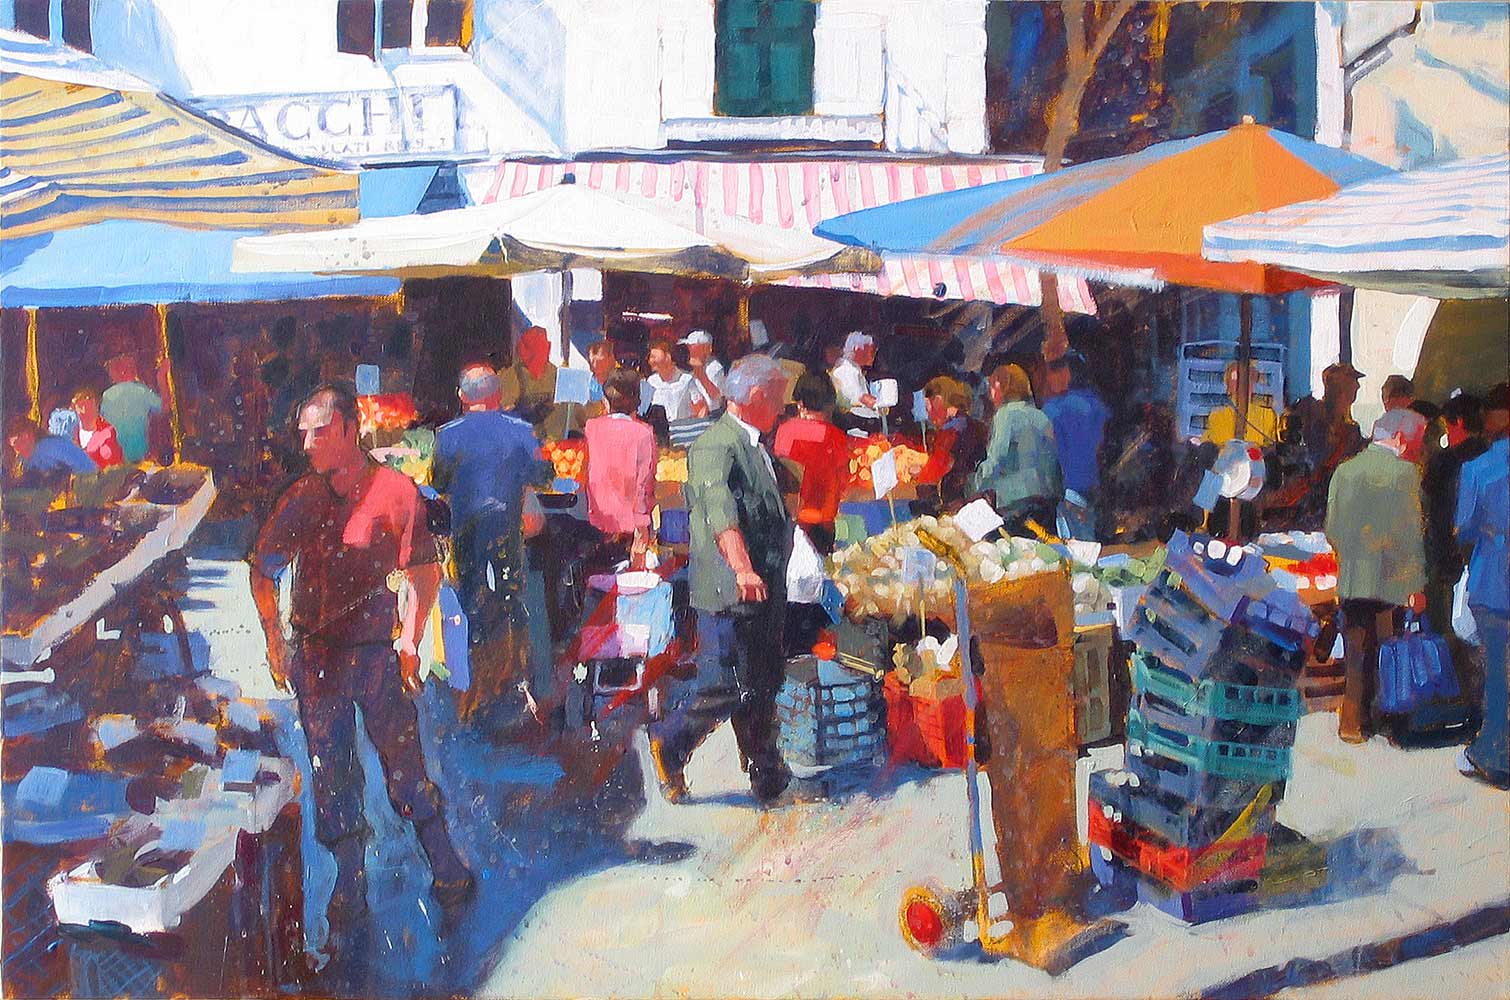 Fruit Market, Napoli - Paul Joseph-Crank